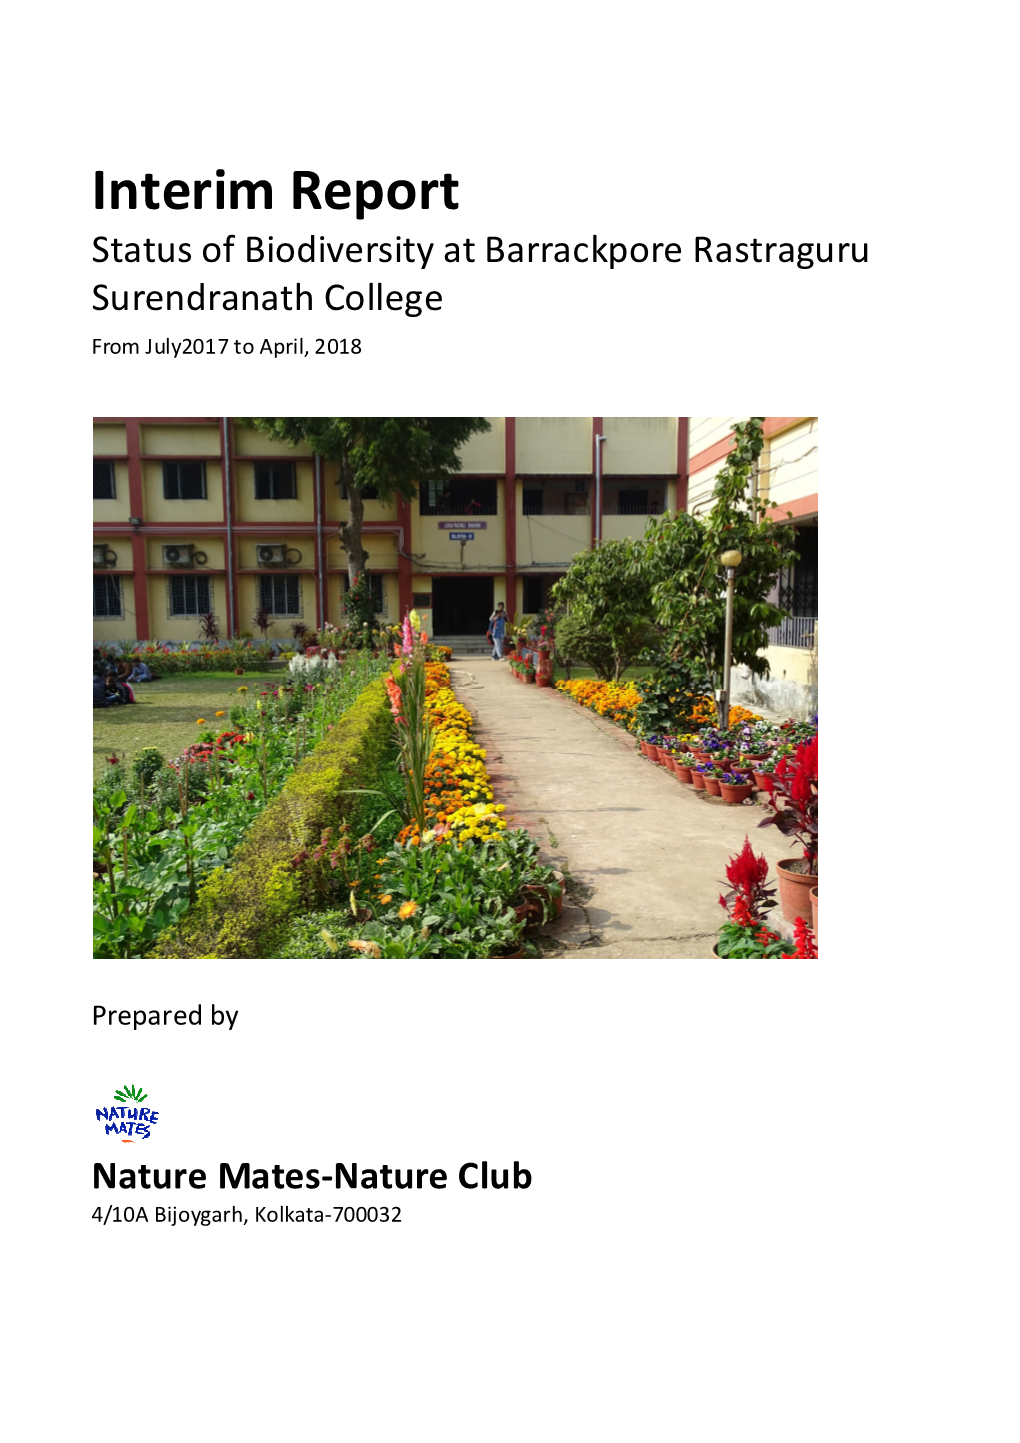 Interim Report Status of Biodiversity at Barrackpore Rastraguru Surendranath College from July2017 to April, 2018